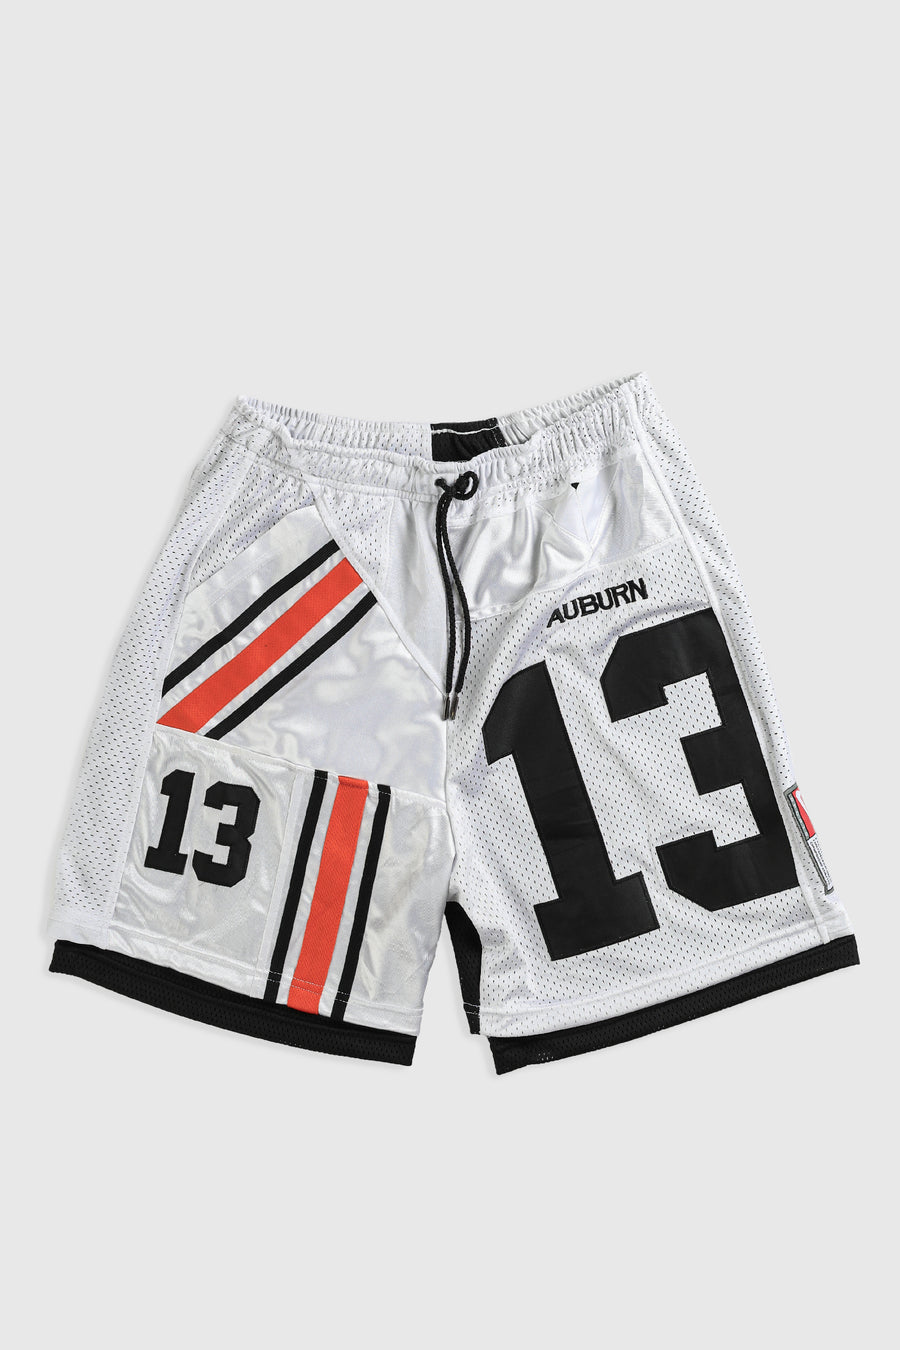 Unisex Rework Tigers Jersey Shorts - M